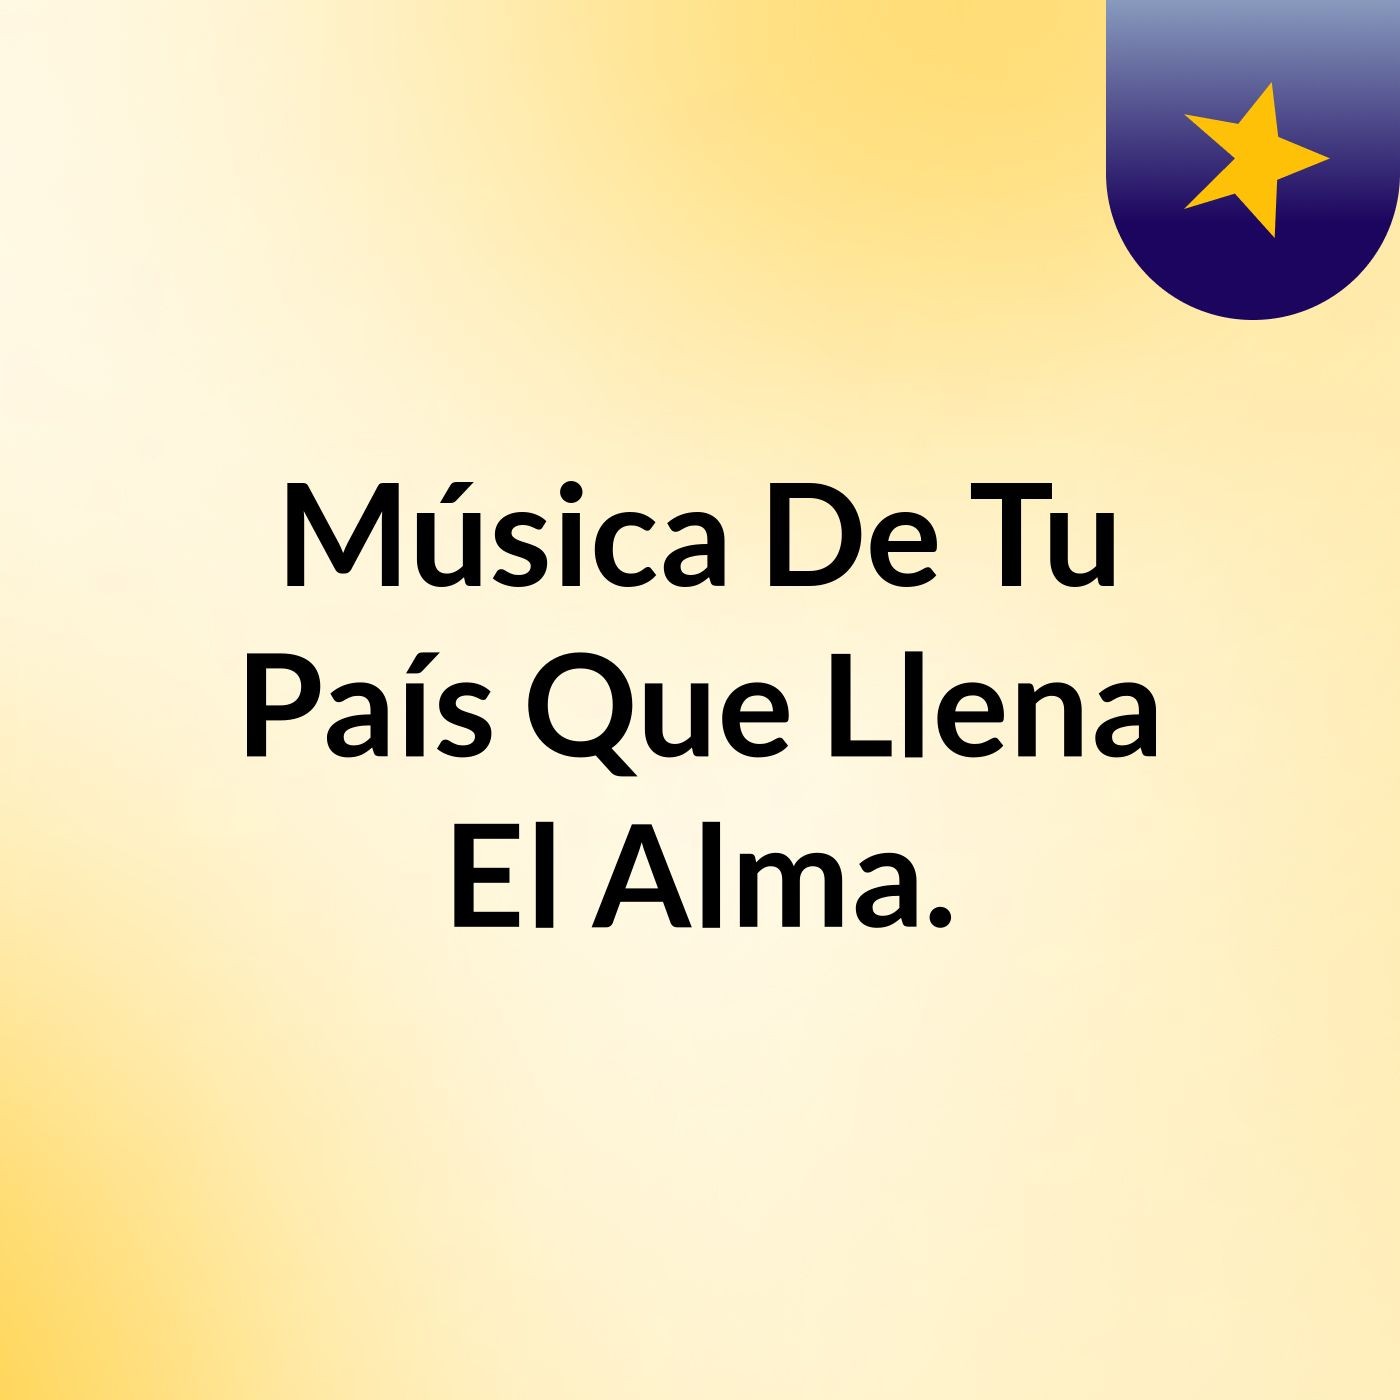 Música De Tu País Que Llena El Alma.